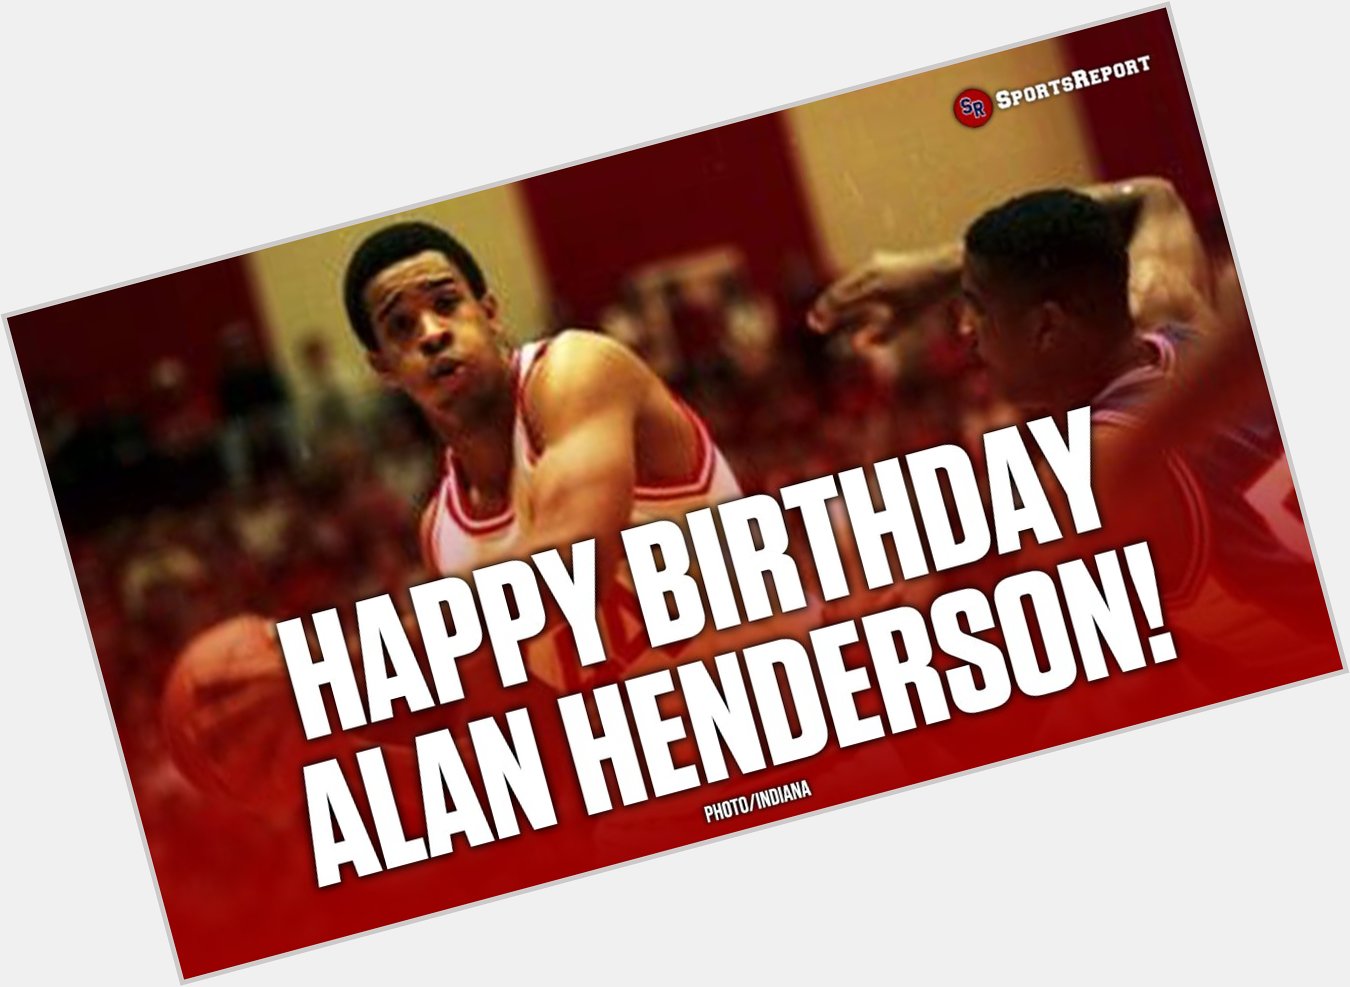  Fans, let\s wish legend Alan Henderson a Happy Birthday! GO 